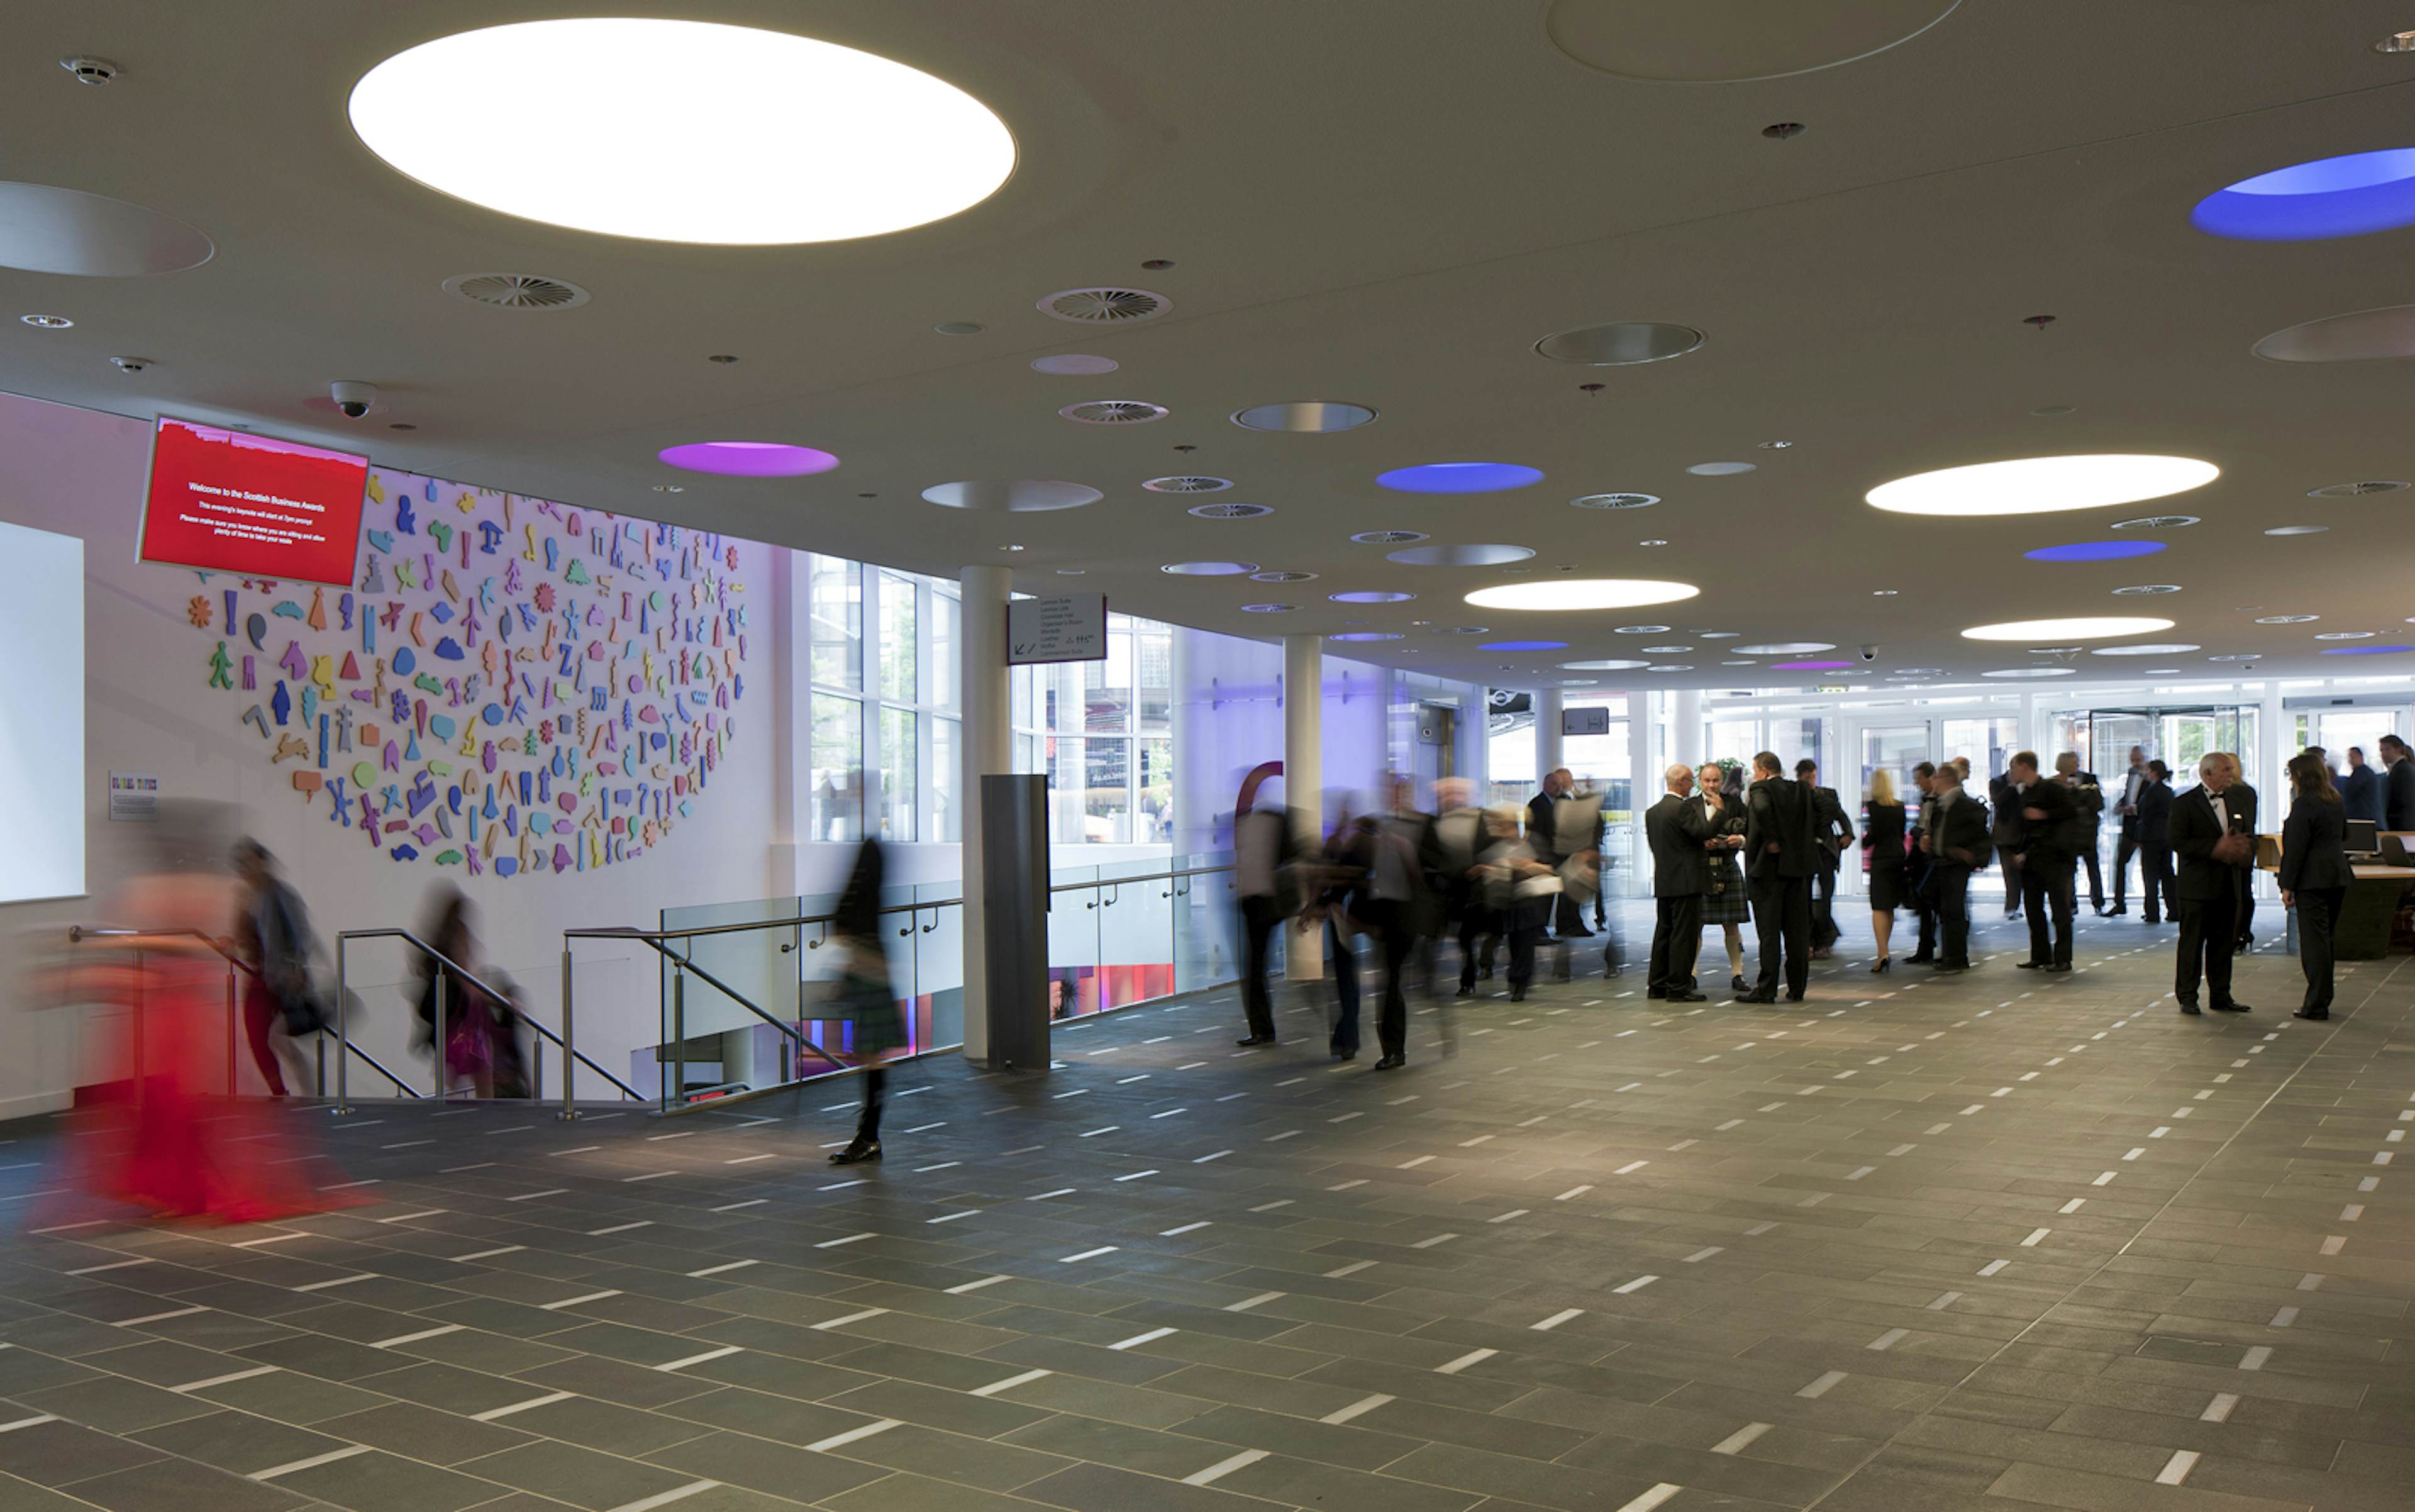 Edinburgh International Conference Centre - Atrium image 1